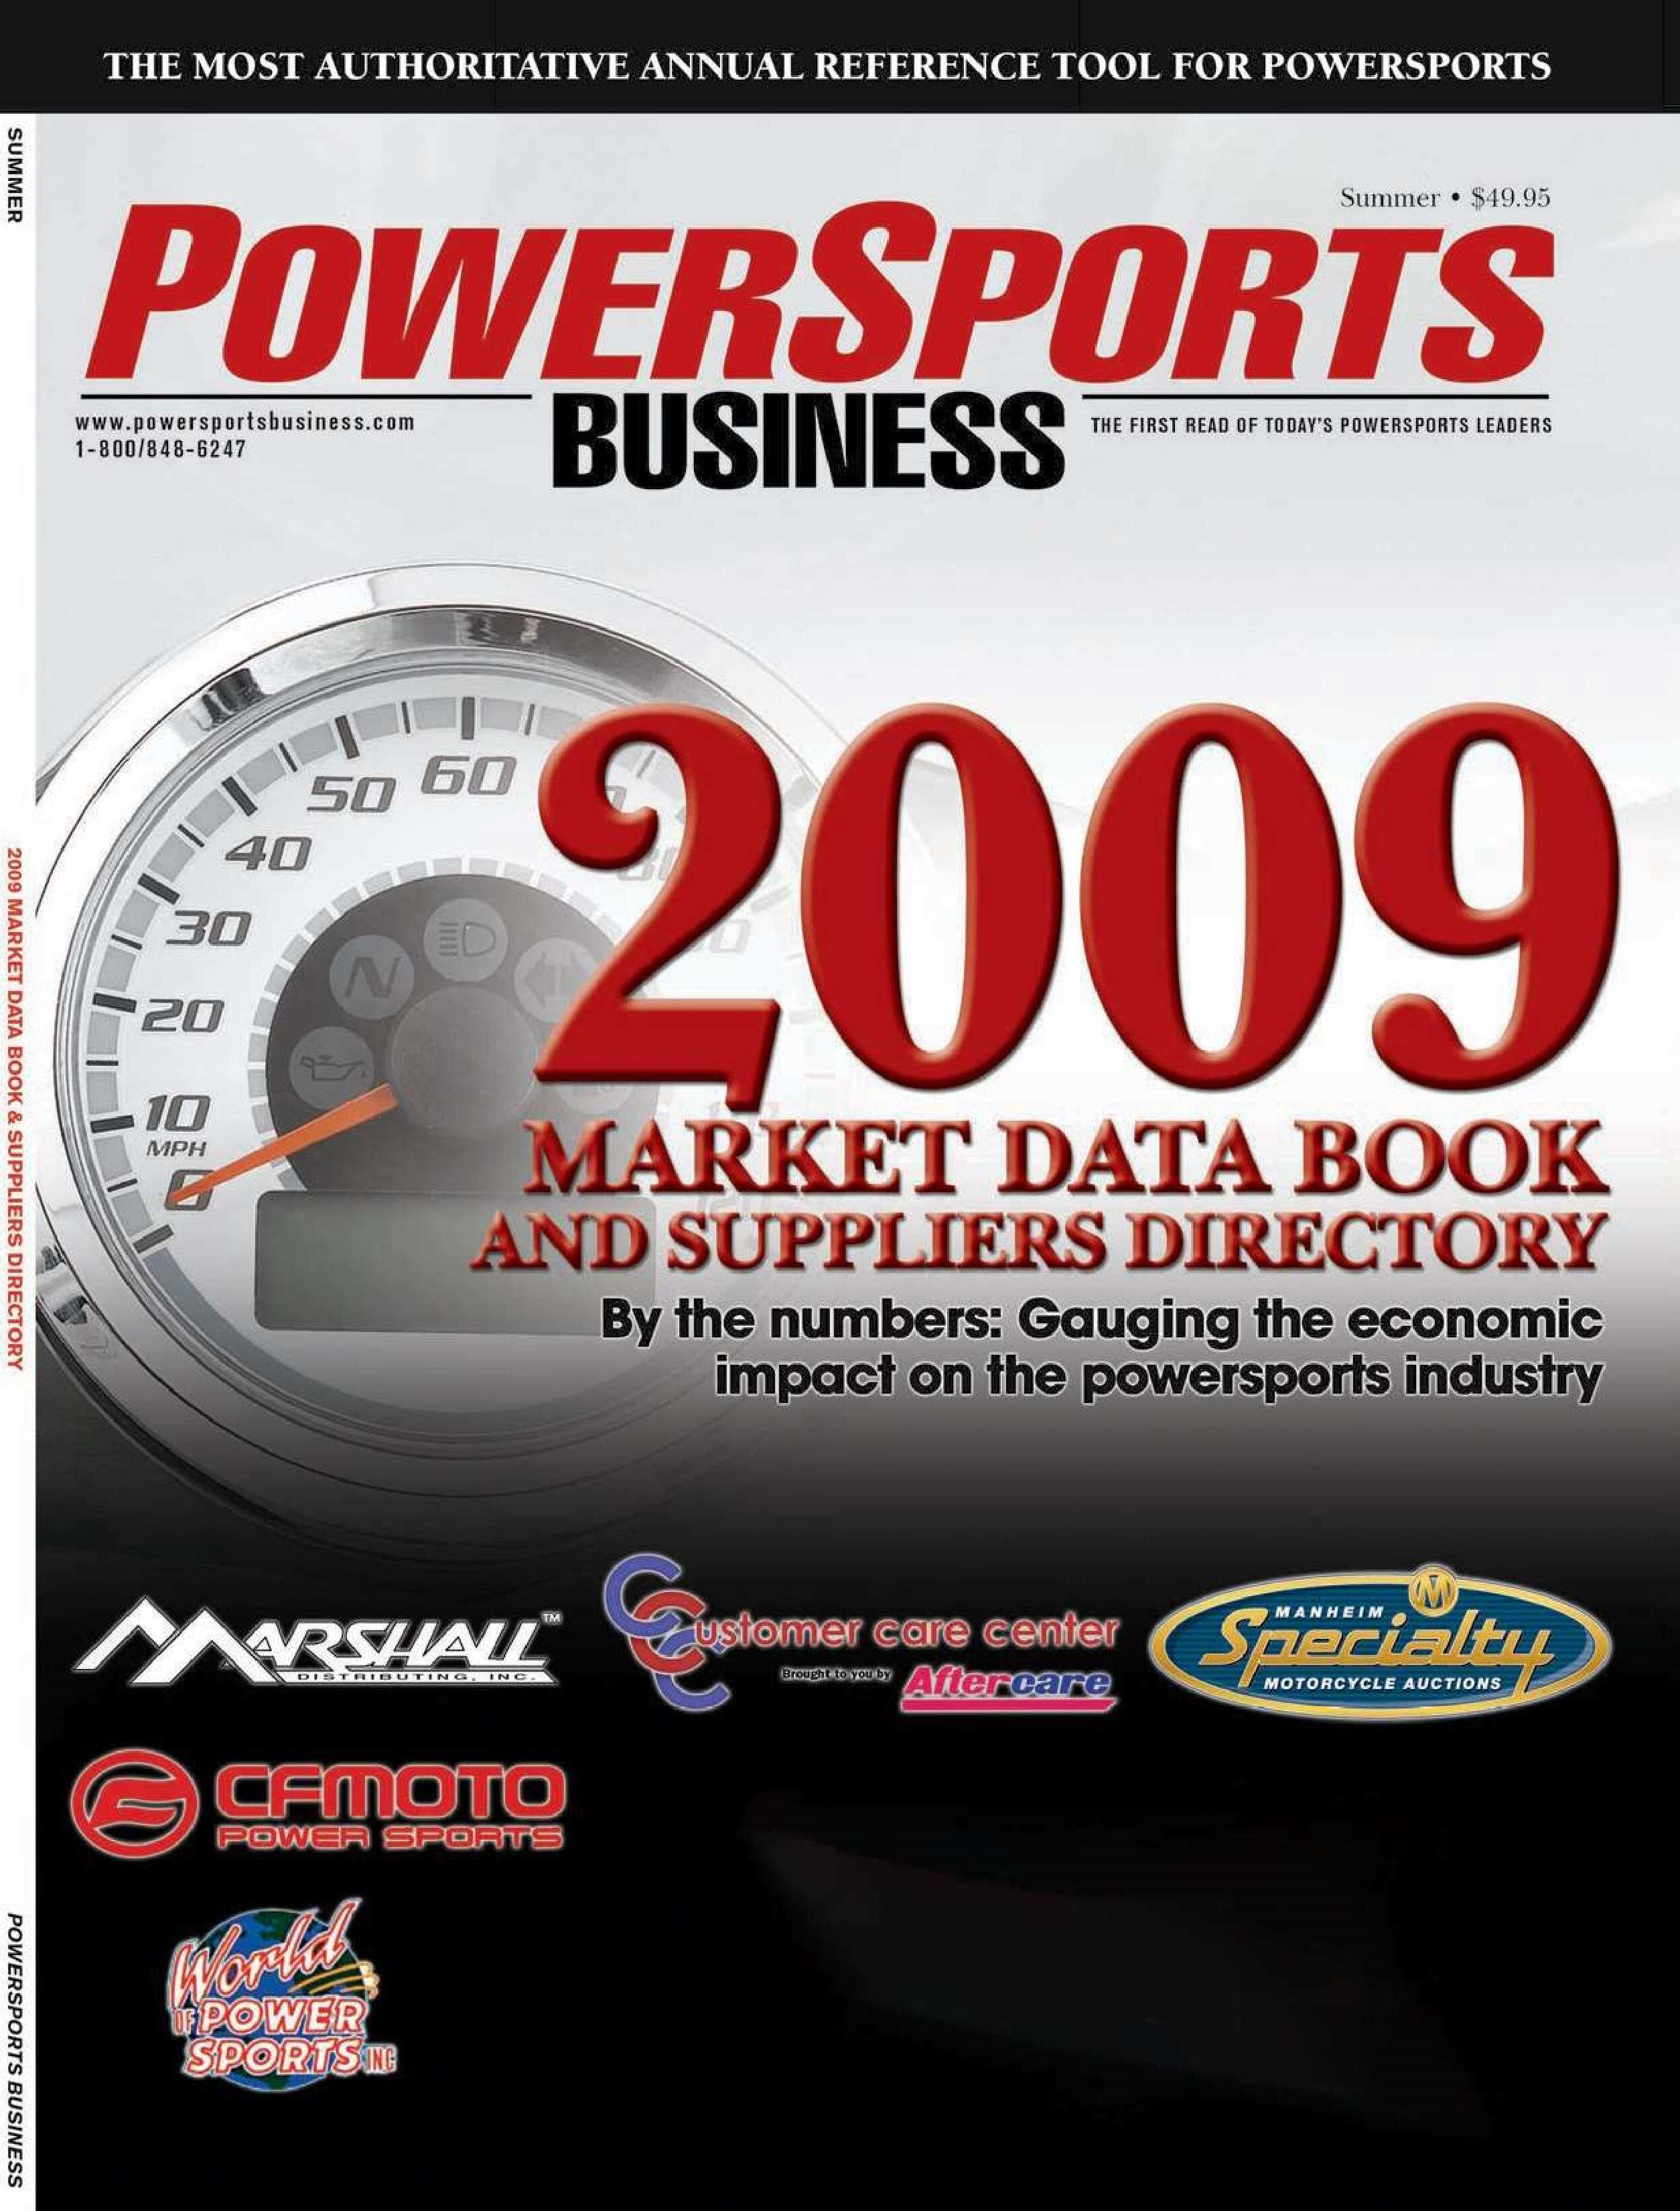 Powersports Business 2009 Market Data Book